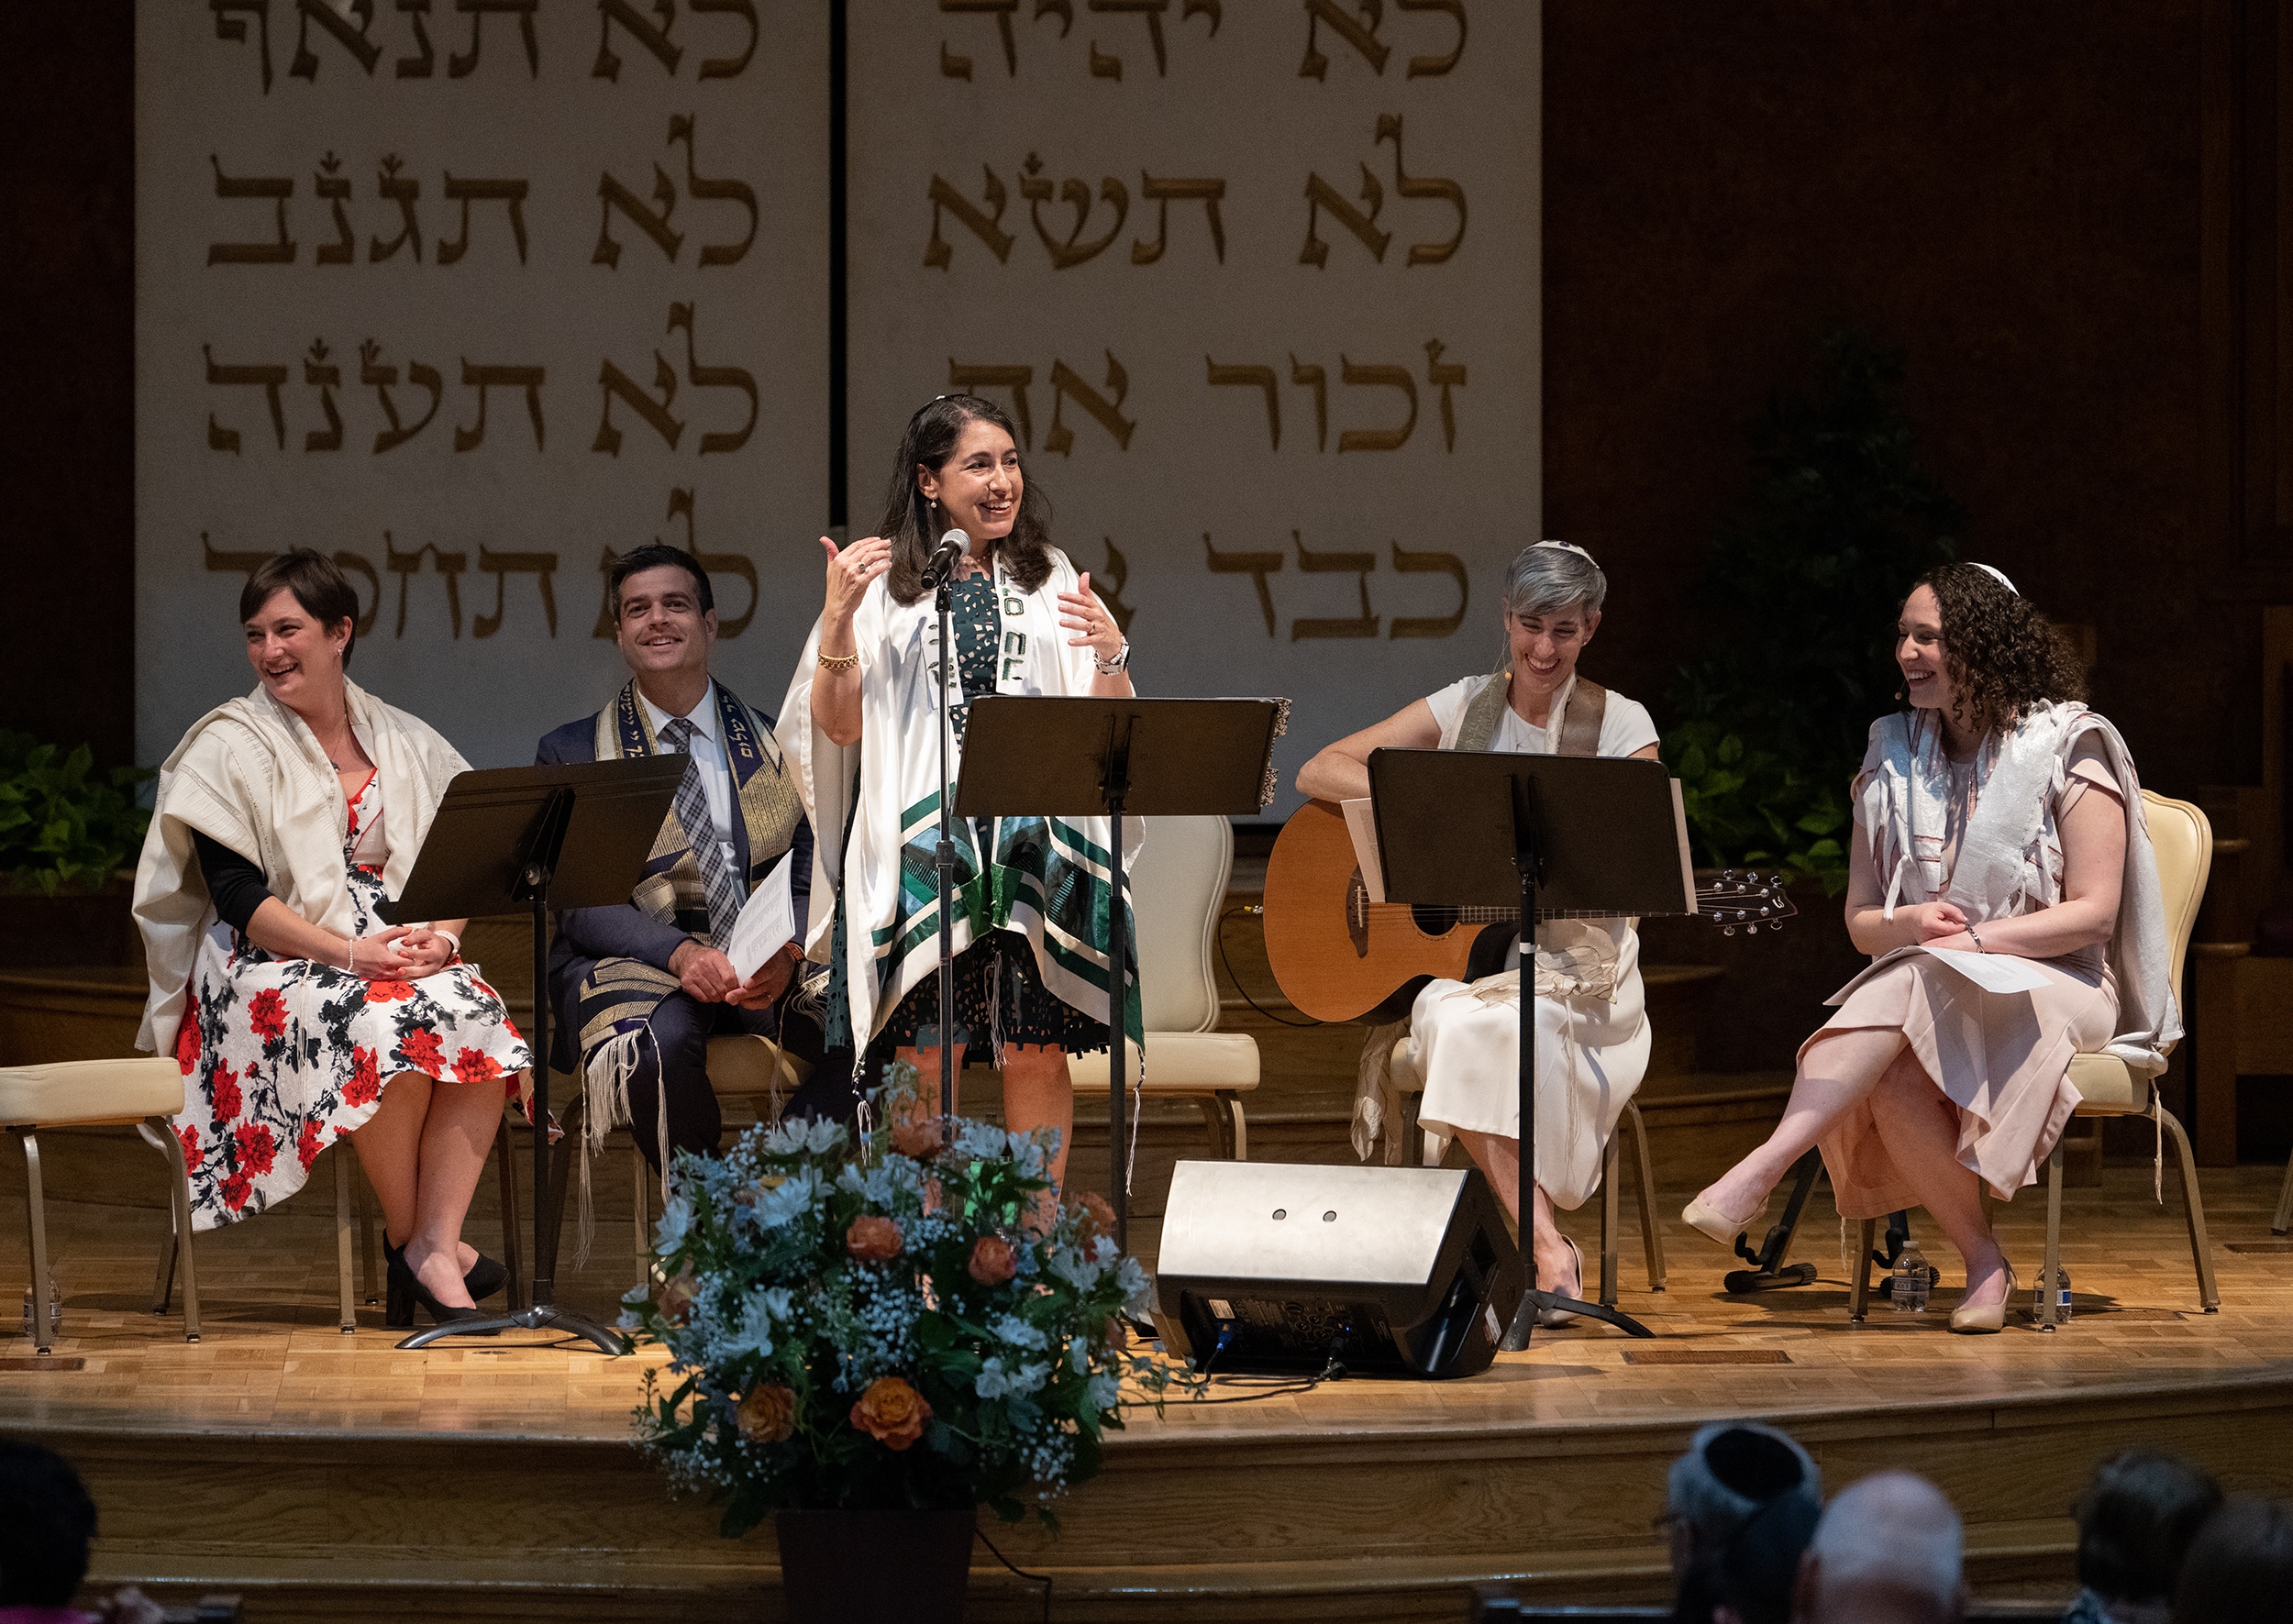 Rabbi Fischel, Rabbi Miller, Rabbi Shankman, Cantor Bortnick, and Cantor Hamstra on the bima.